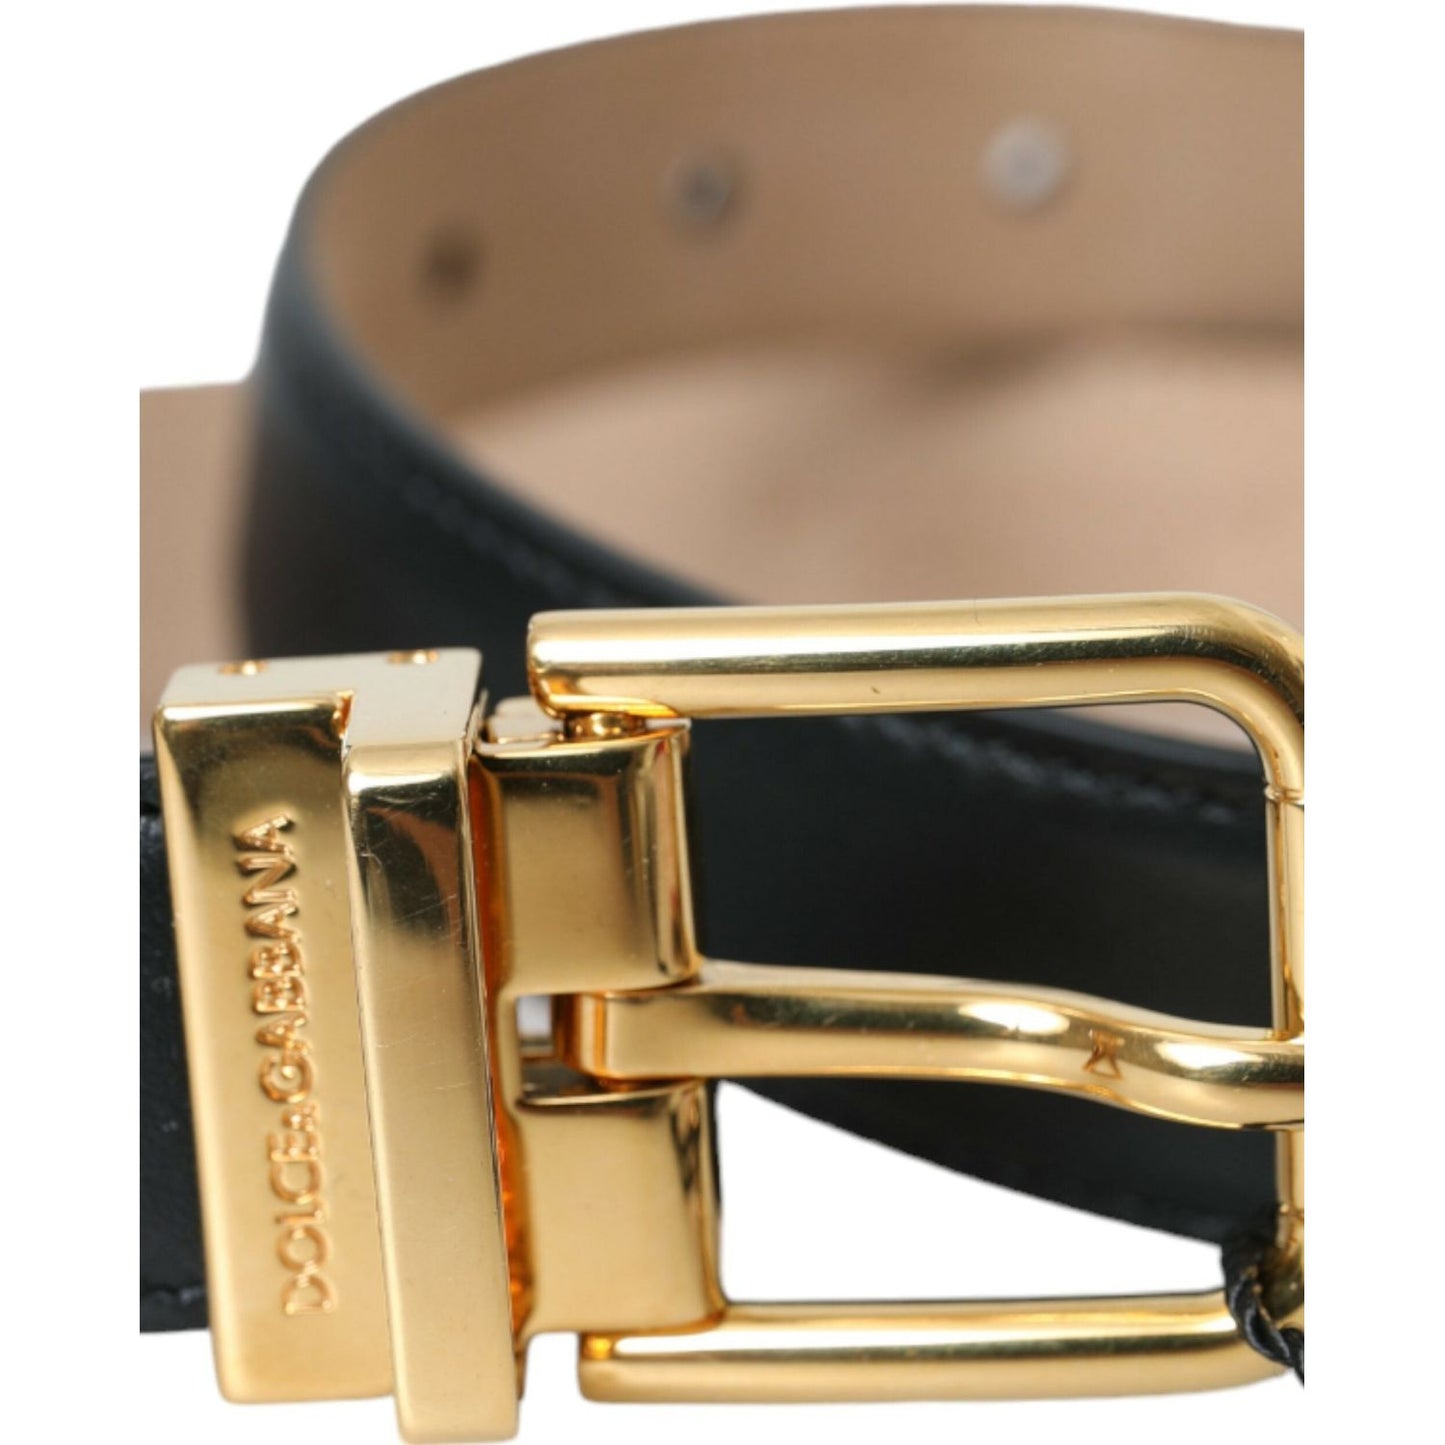 Dolce & Gabbana Black Leather Gold Metal Buckle Belt Men black-leather-gold-metal-buckle-belt-men